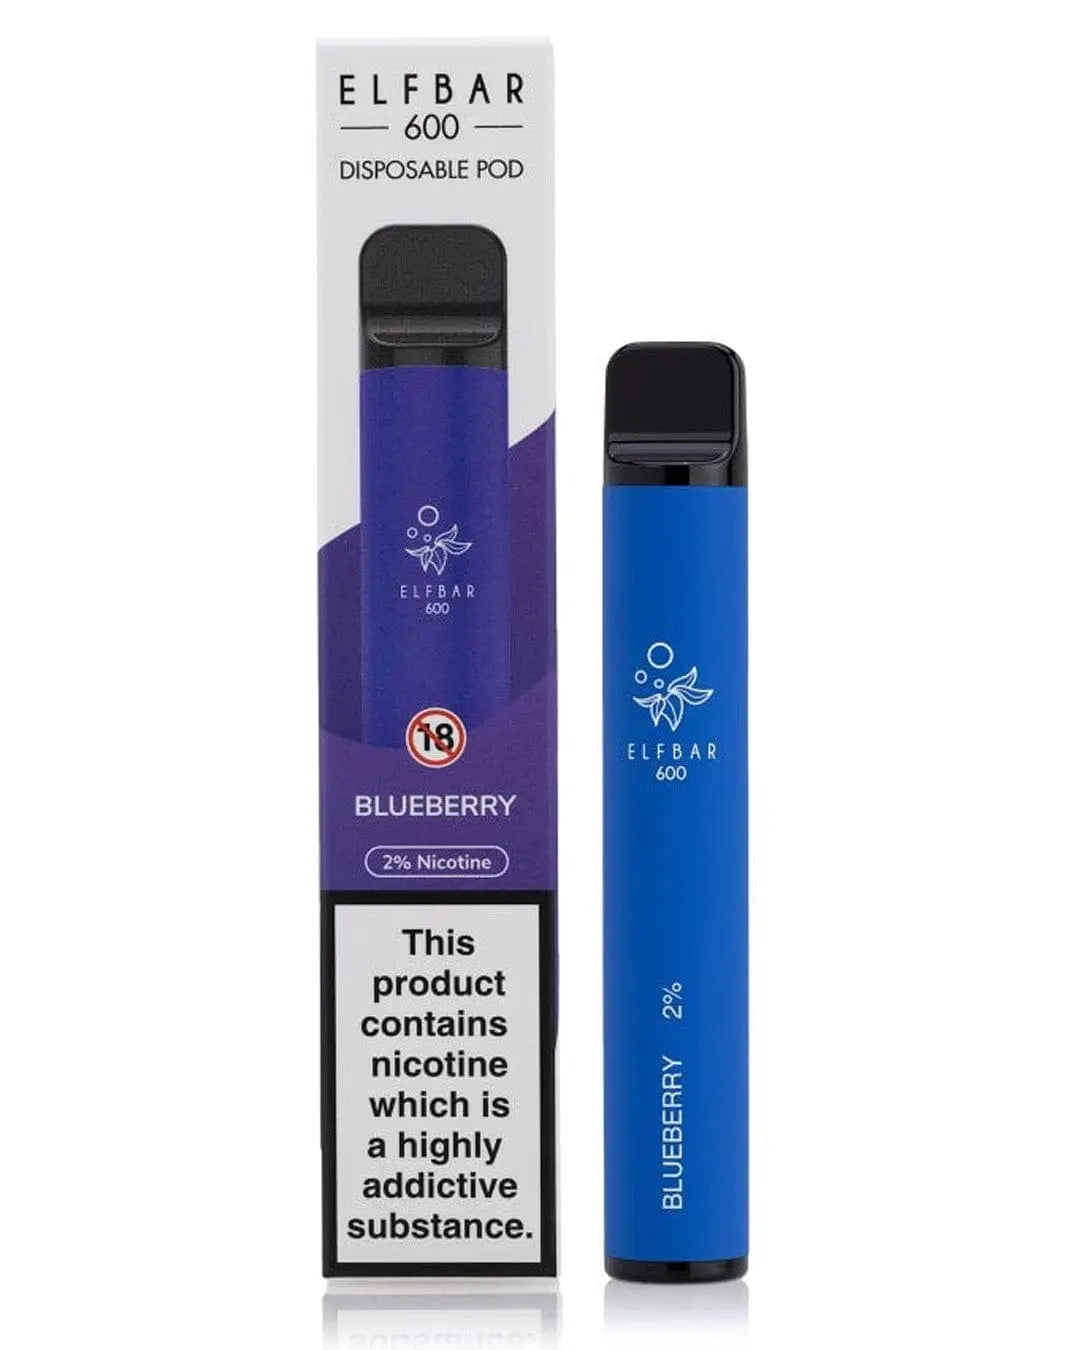 Elfbar Blueberry Disposable Vapes